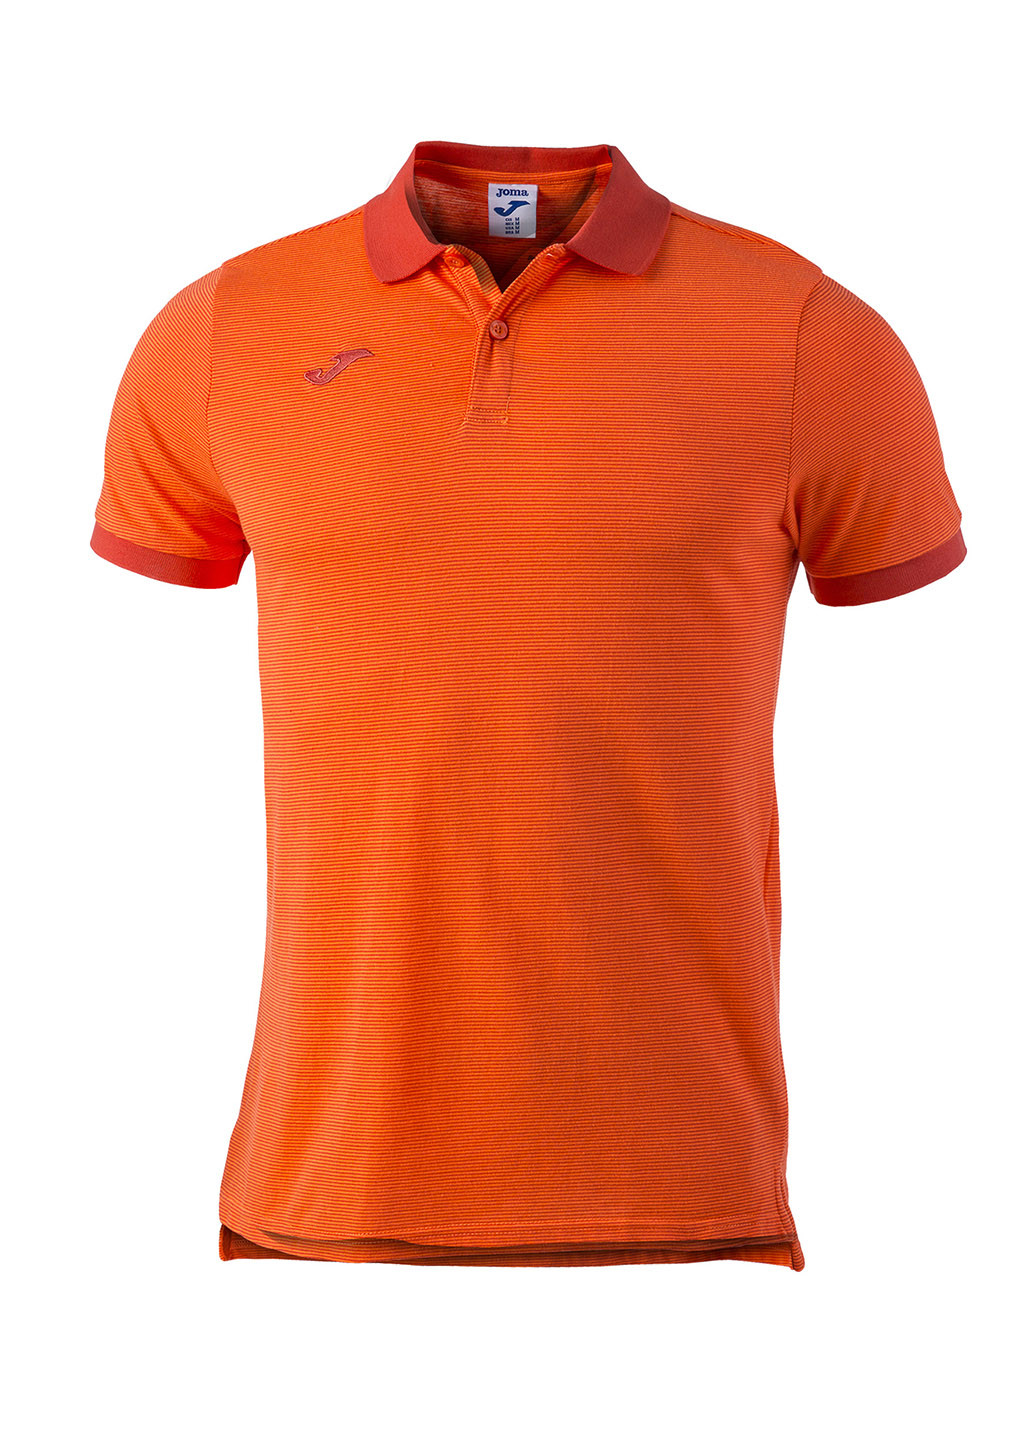 Оранжевая футболка-поло для мужчин Joma с логотипом